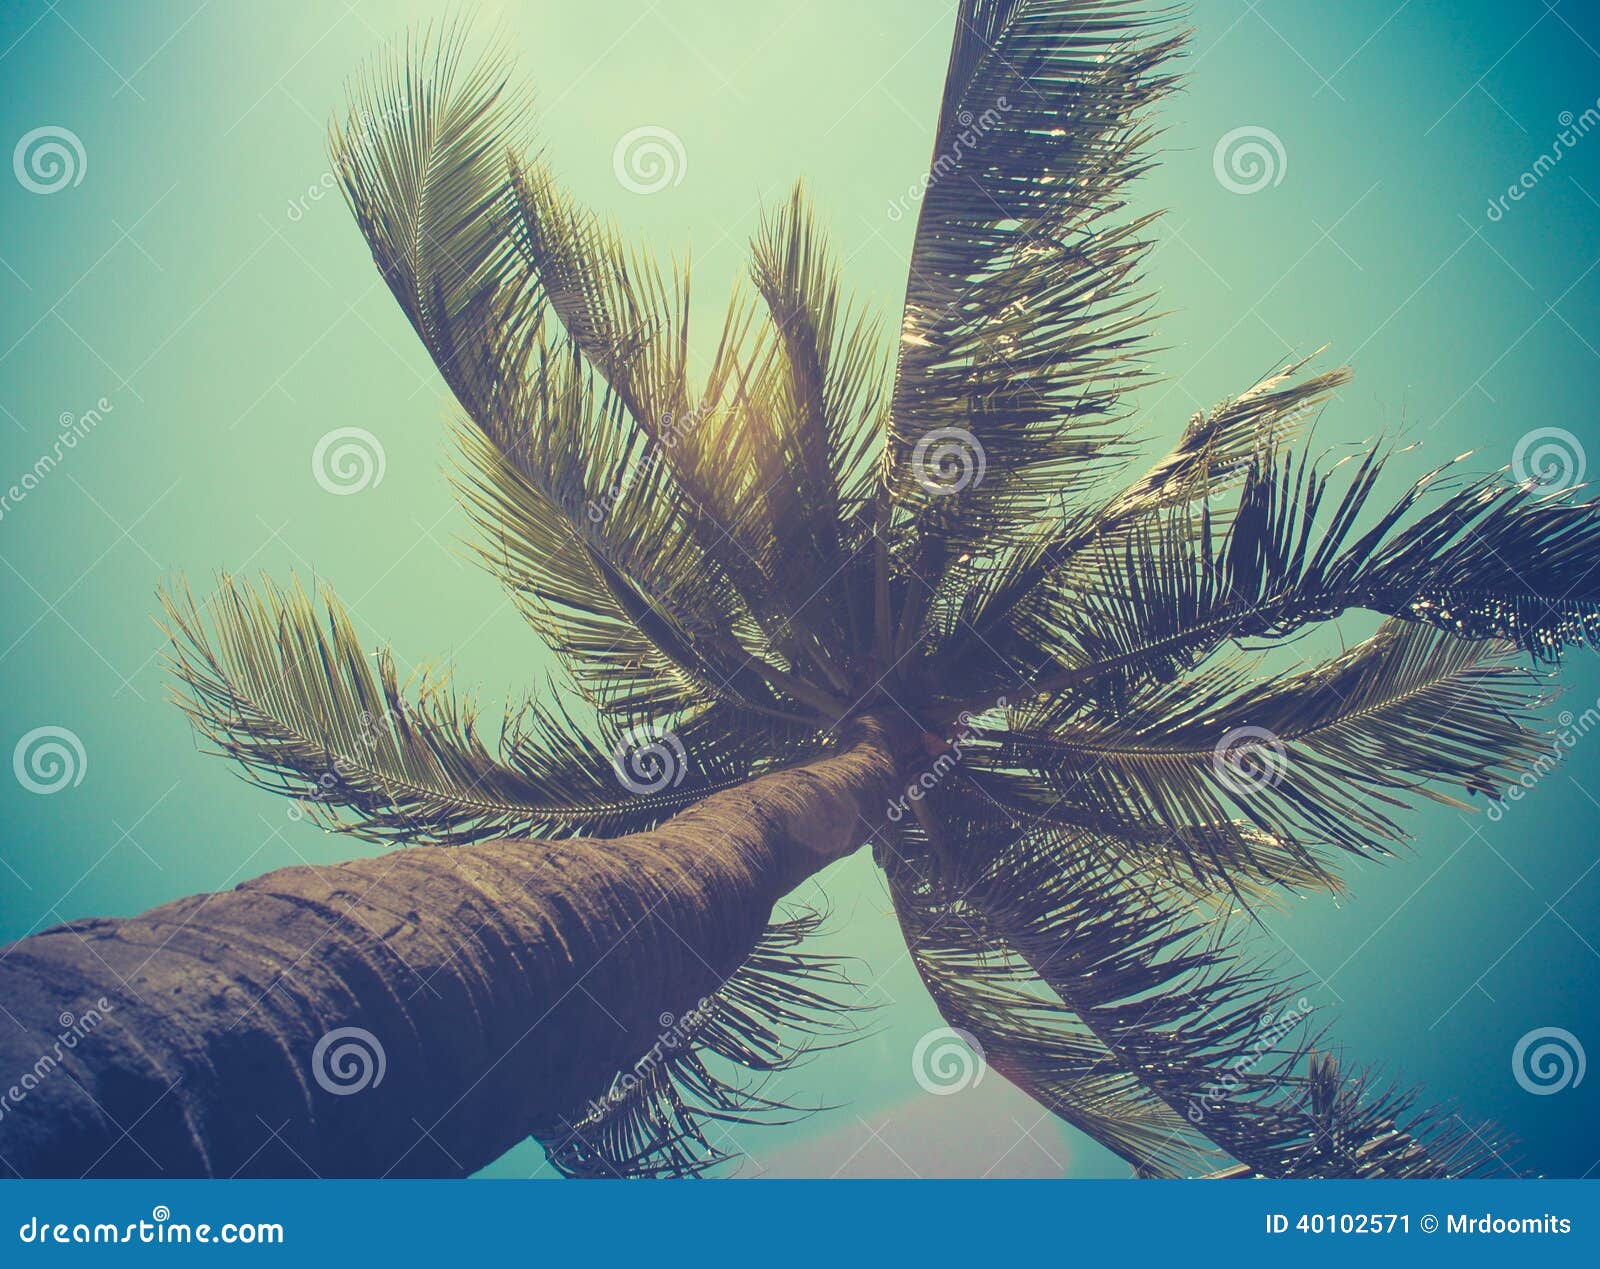 retro filtered single palm tree